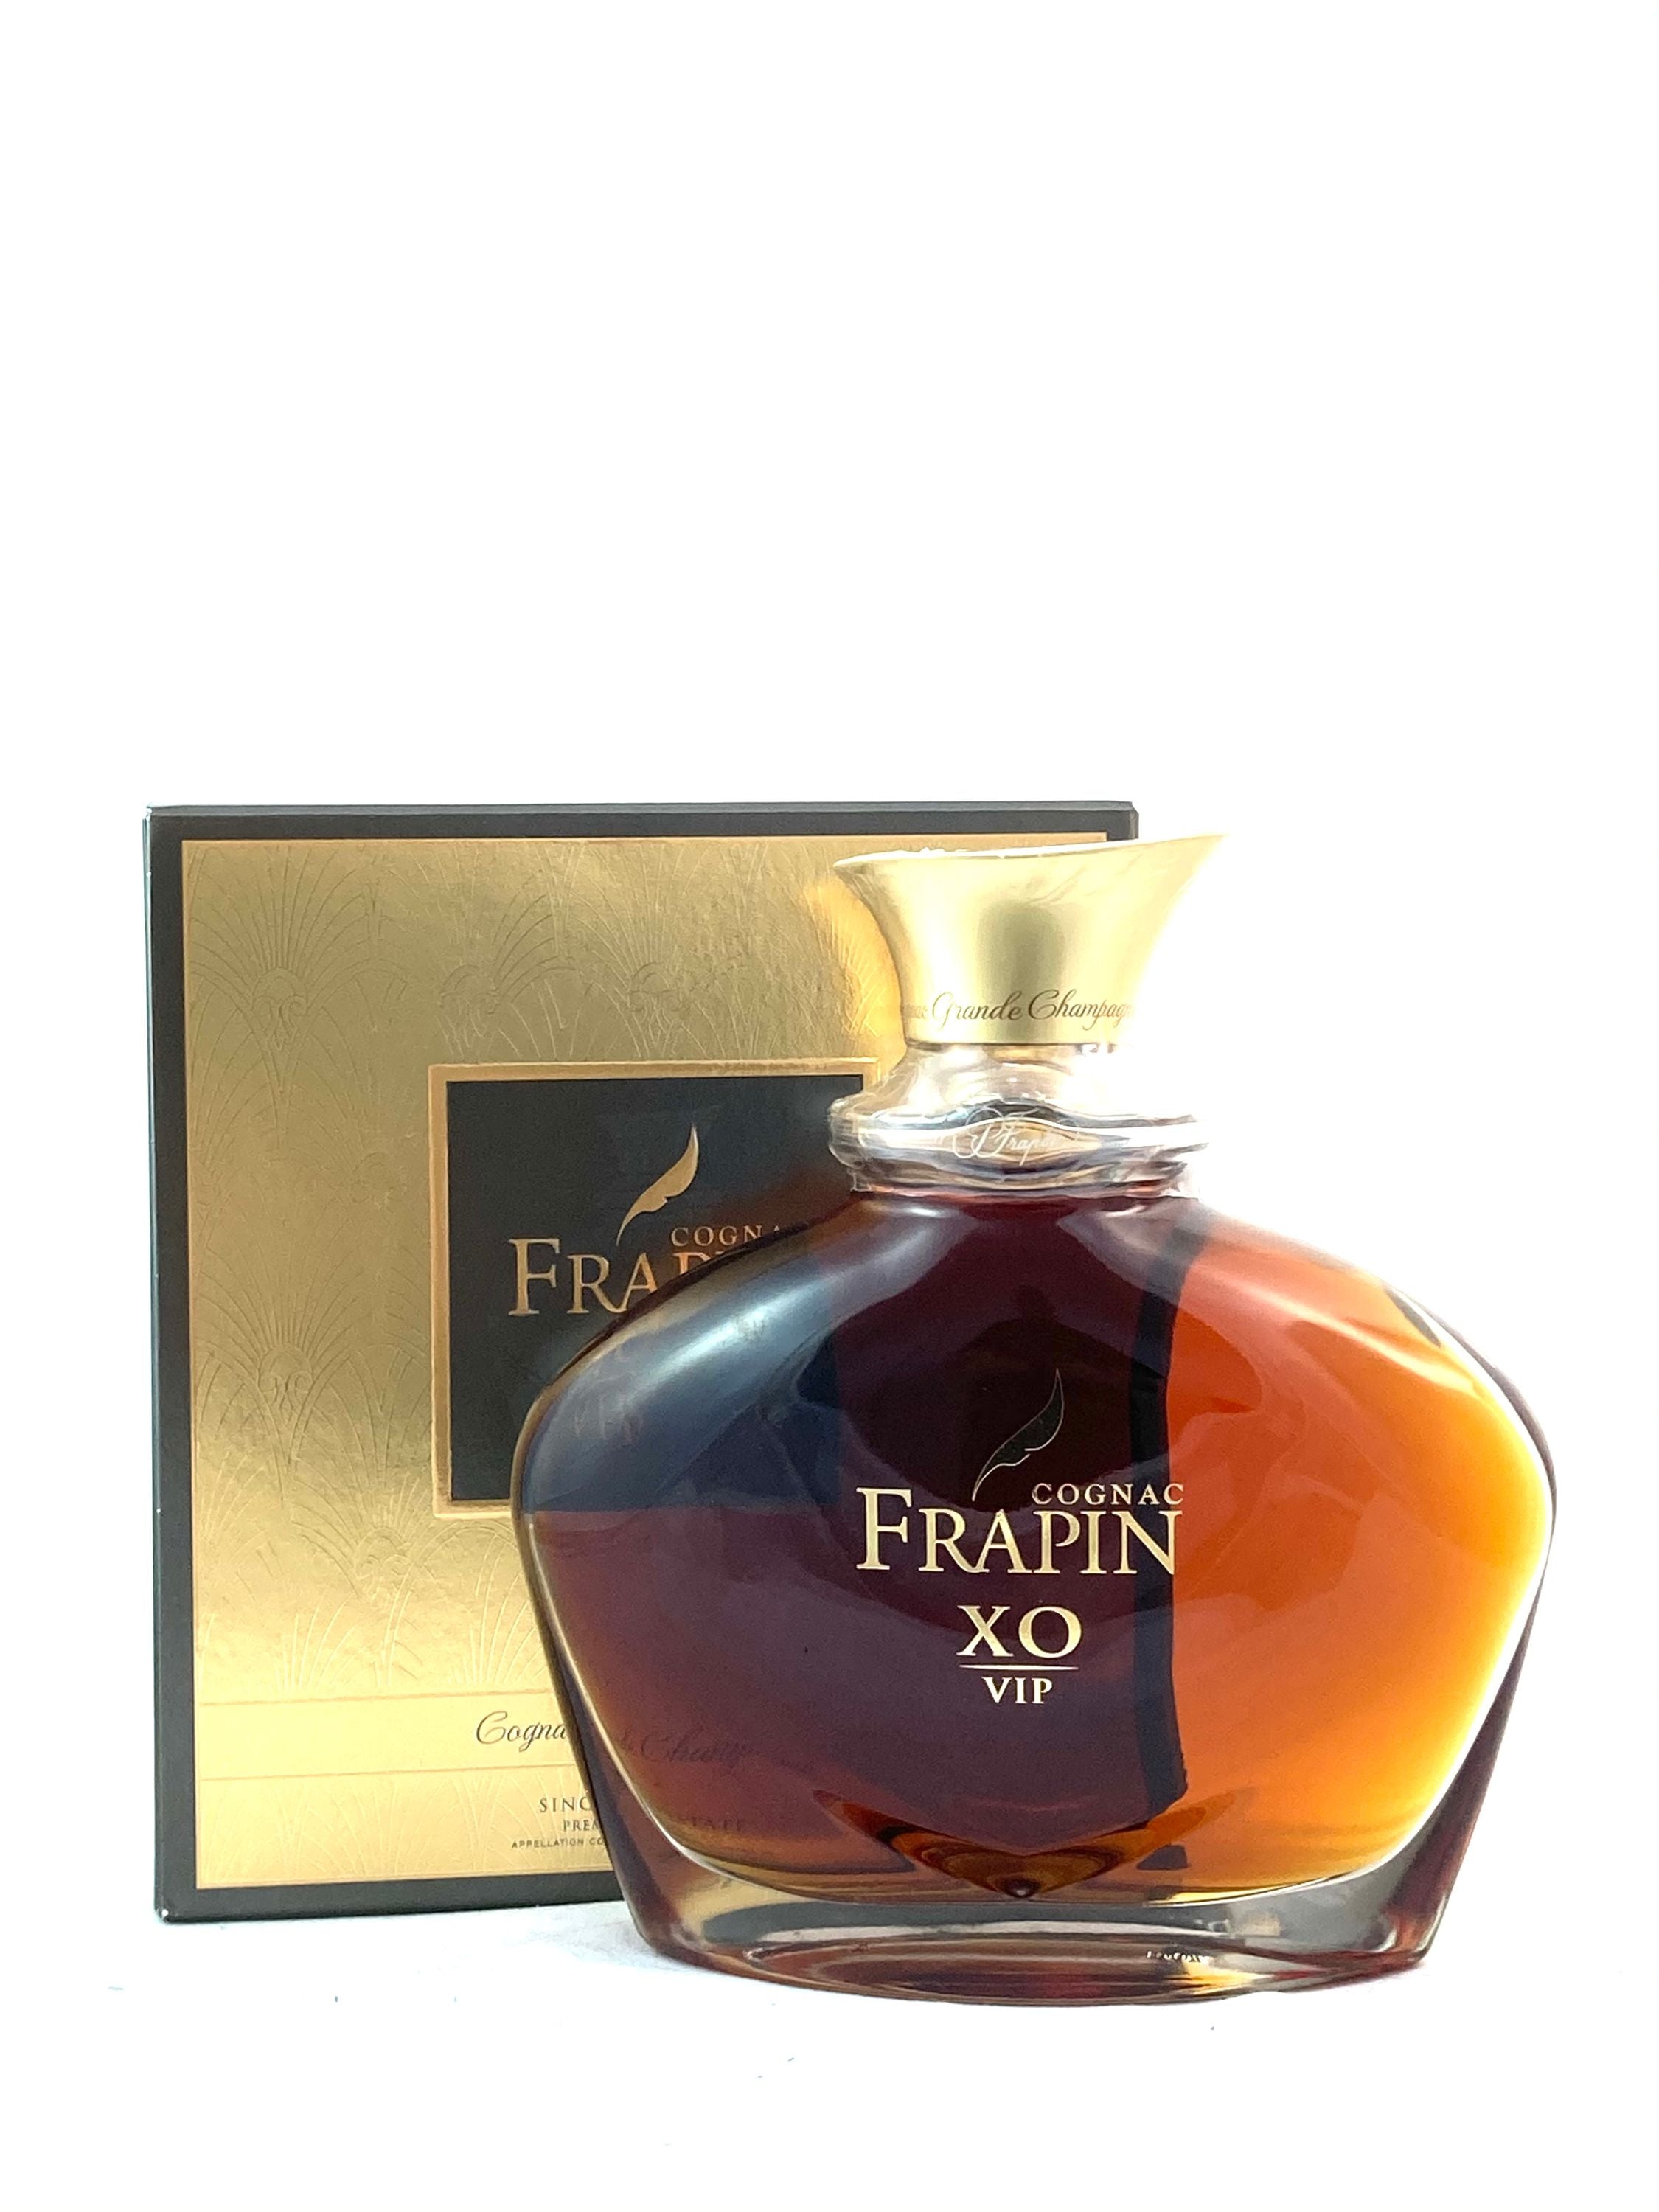 Frapin XO VIP 0.7l, alc. 40% by volume, Cognac France